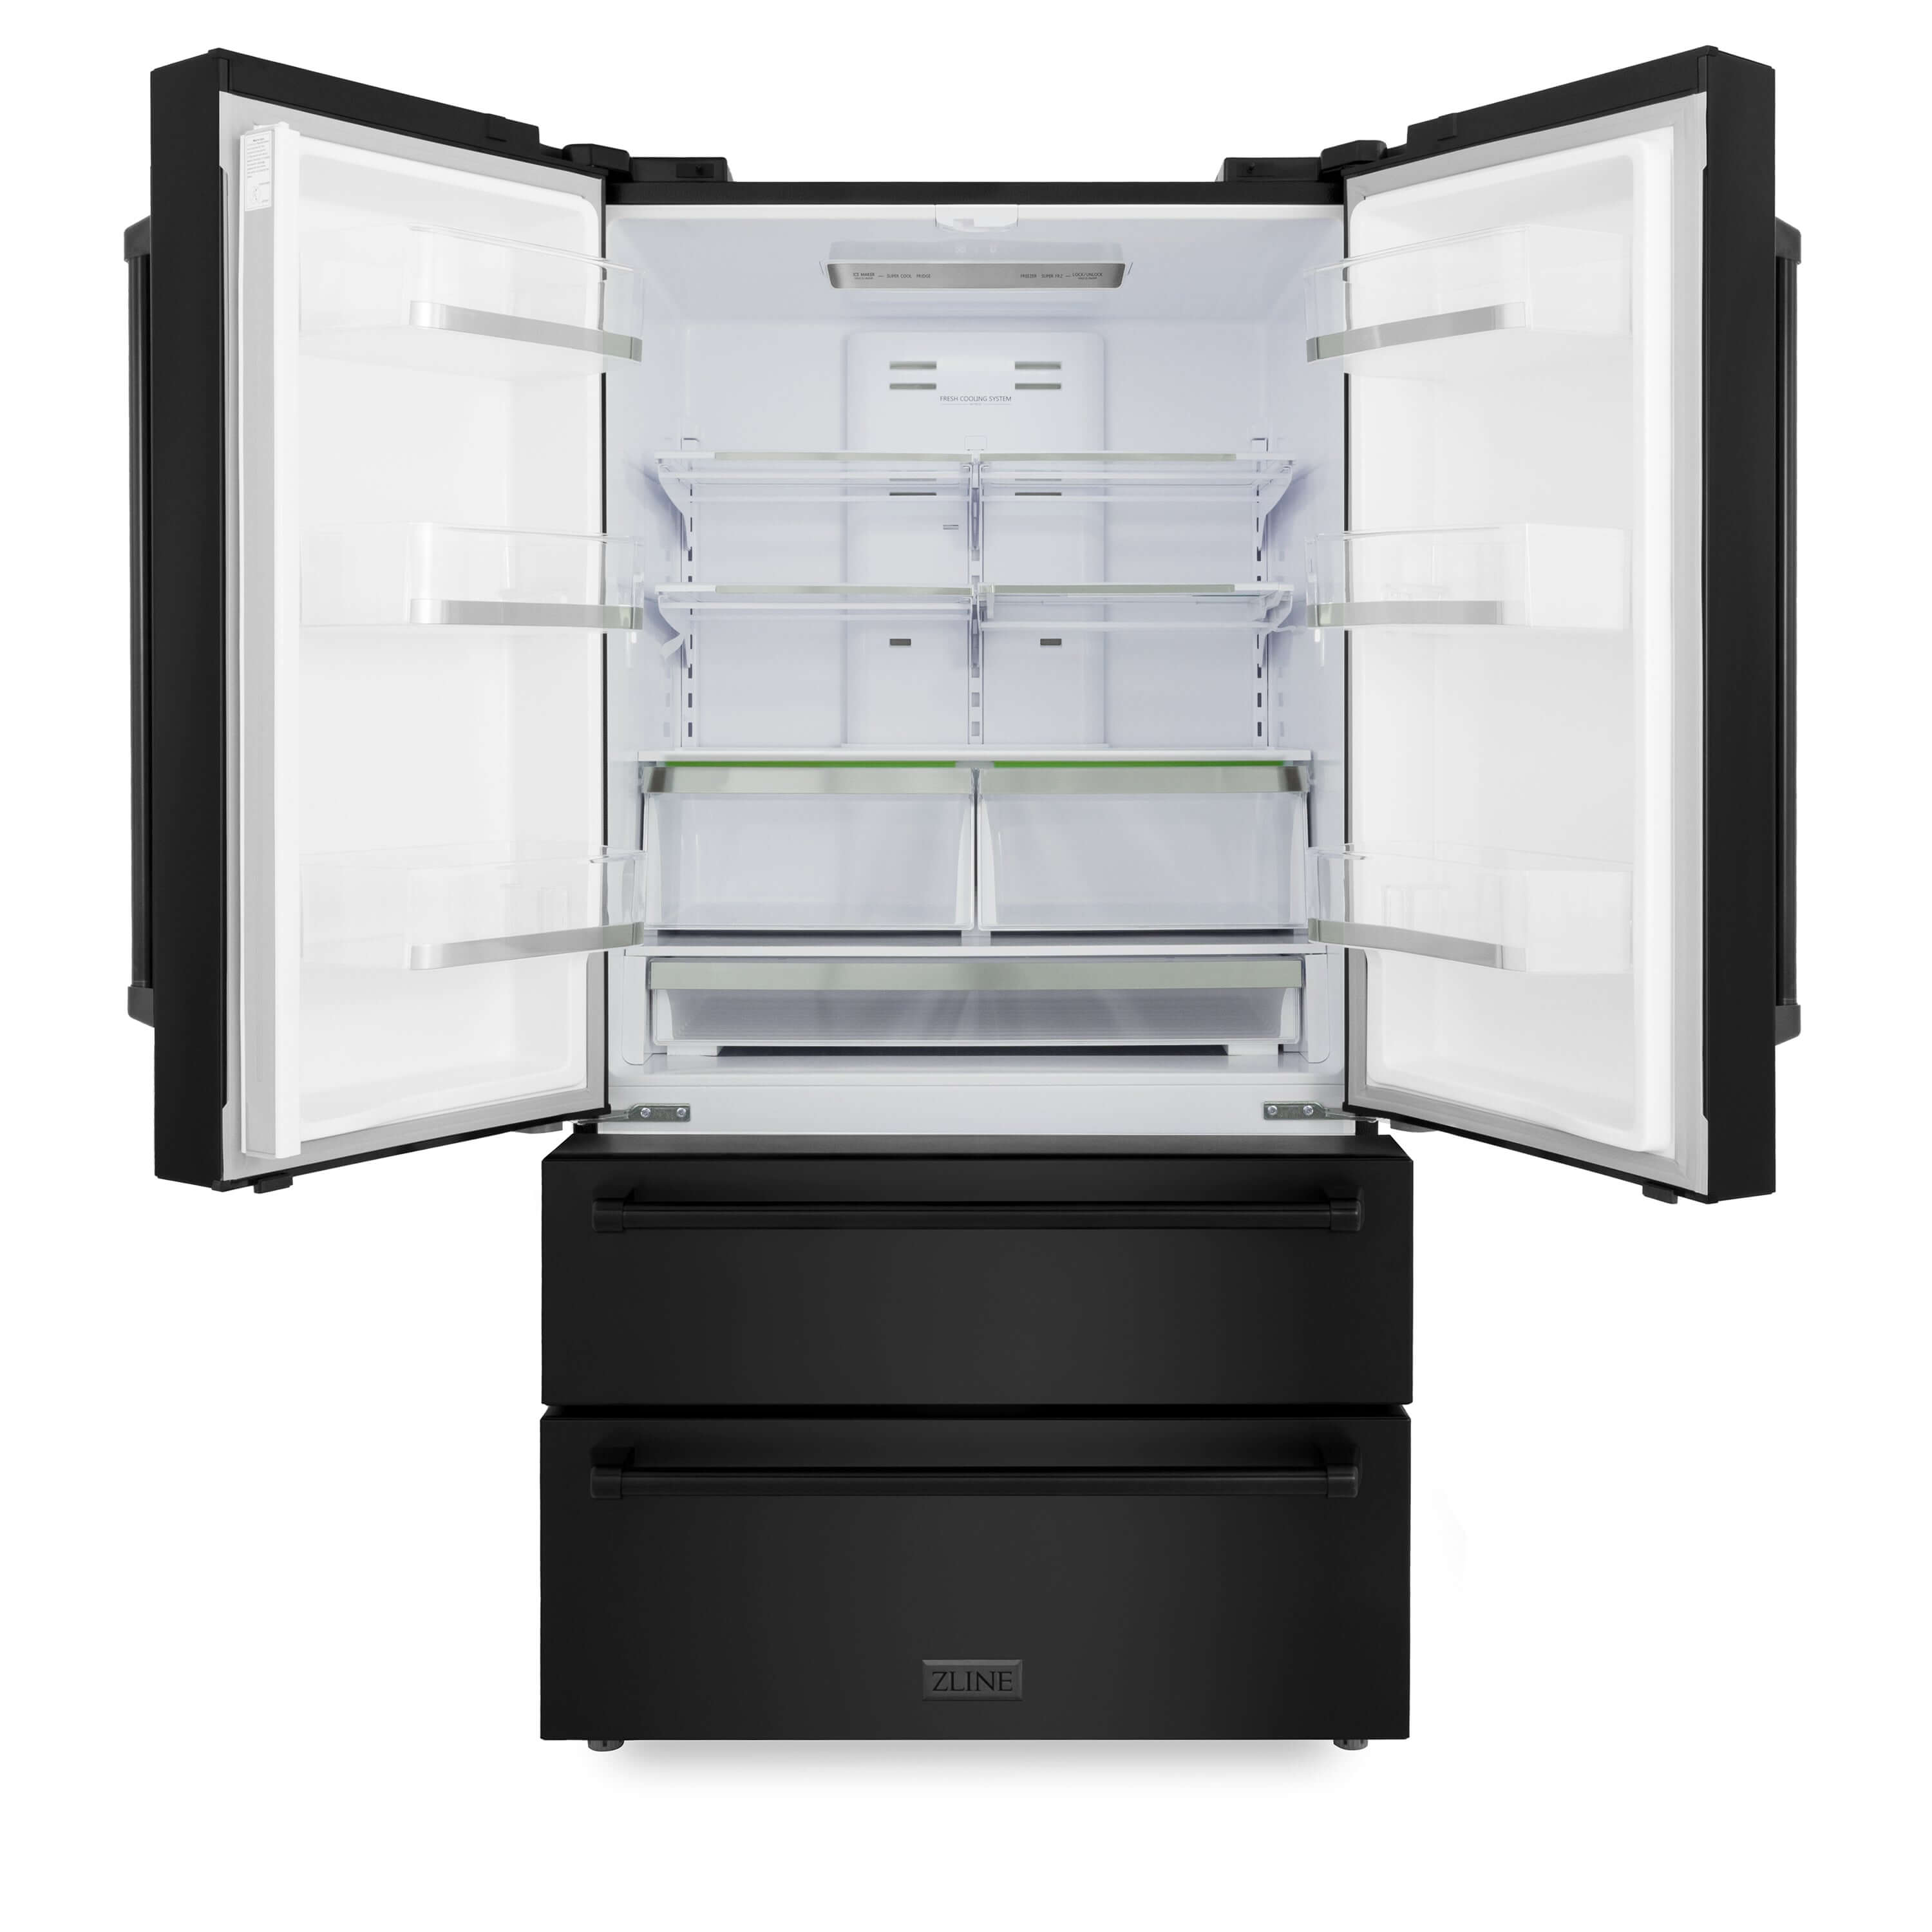 ZLINE 36 in. Freestanding French Door Refrigerator with Ice Maker in Black Stainless Steel (RFM-36-BS) front, open.